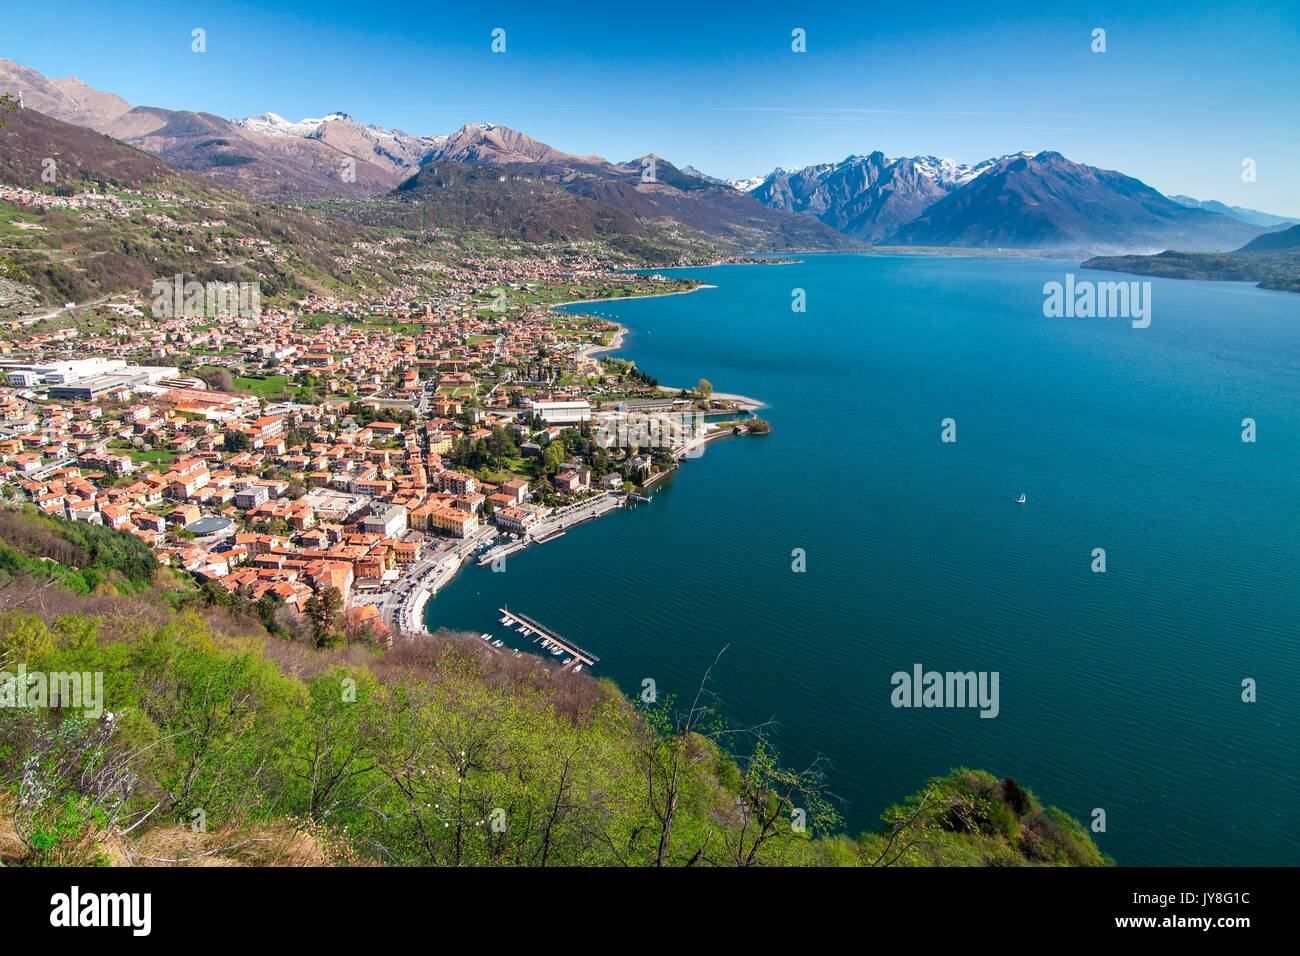 Como lake seen from Dongo, High Lario. Lombardy Italy Europe Stock Photo